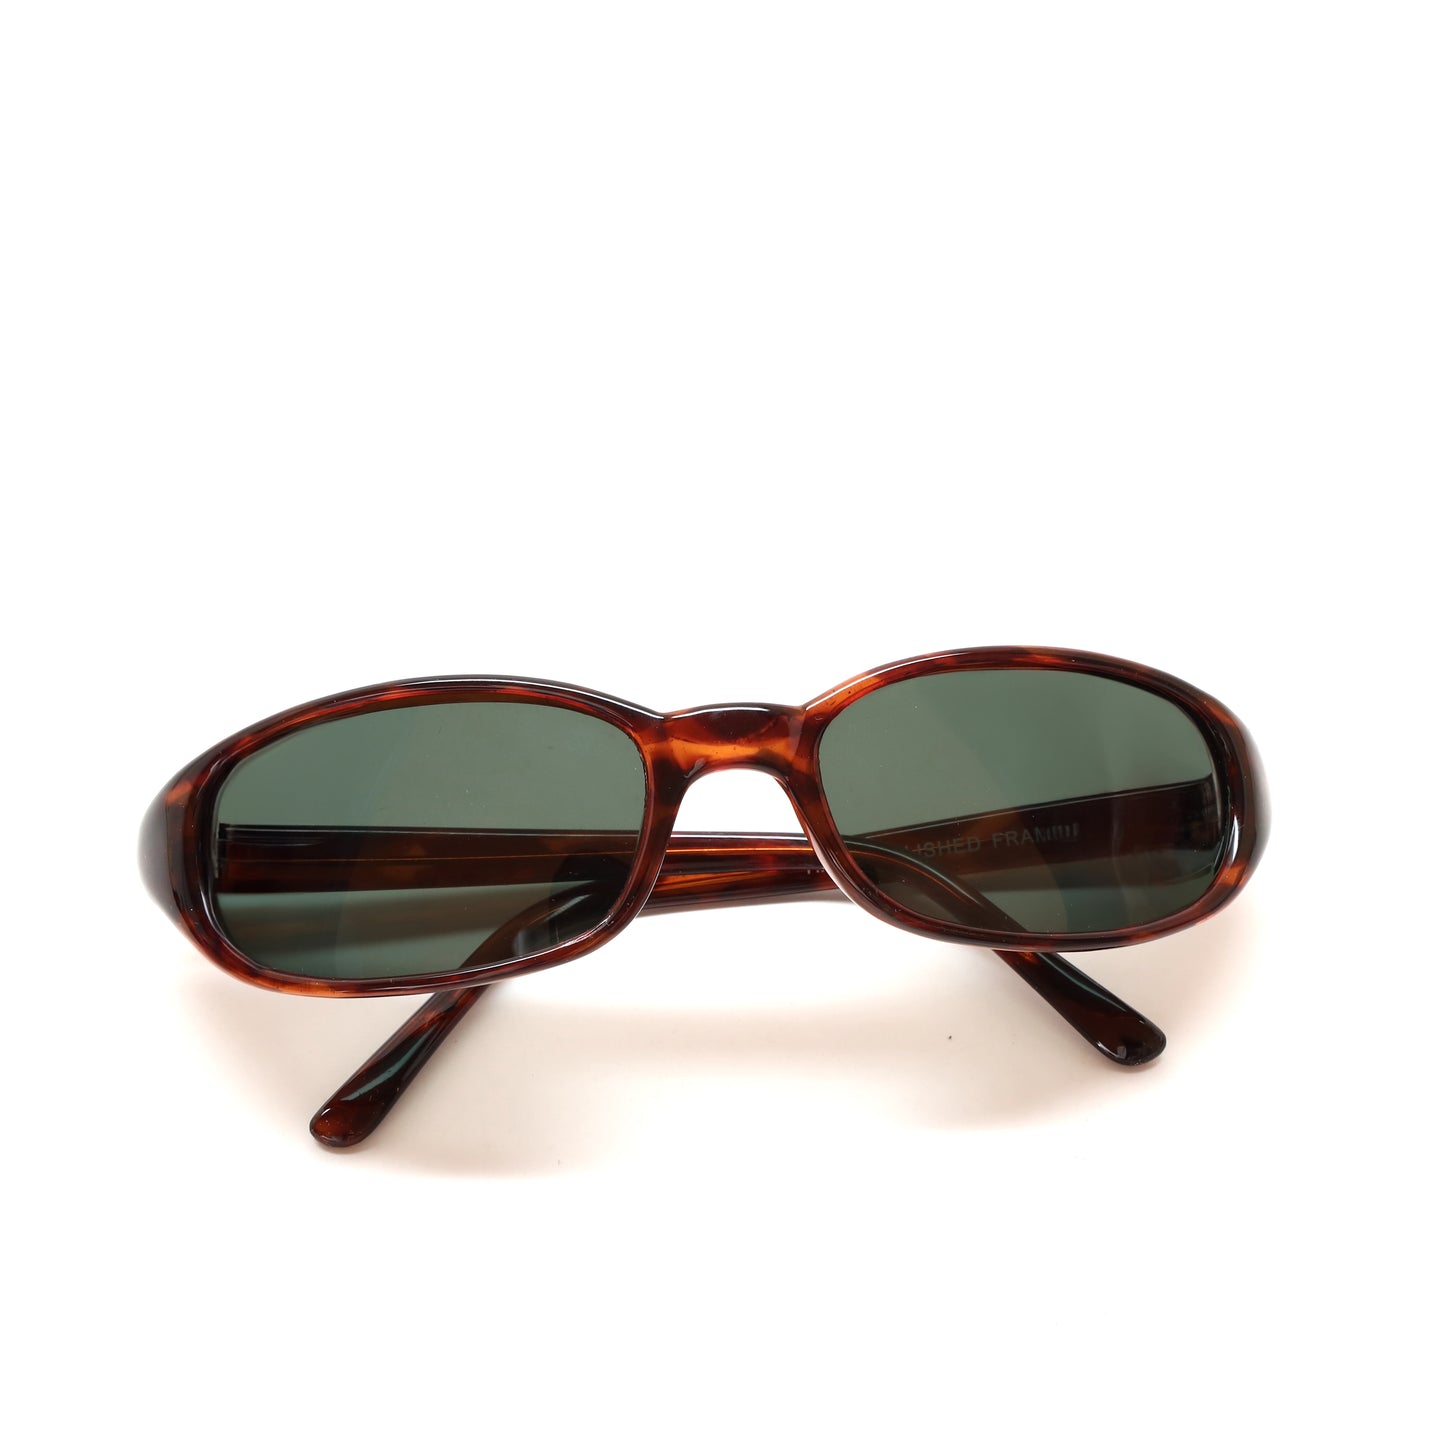 Deluxe Vintage 90s Deadstock Wraparound Oval Sunglasses - Tortoise